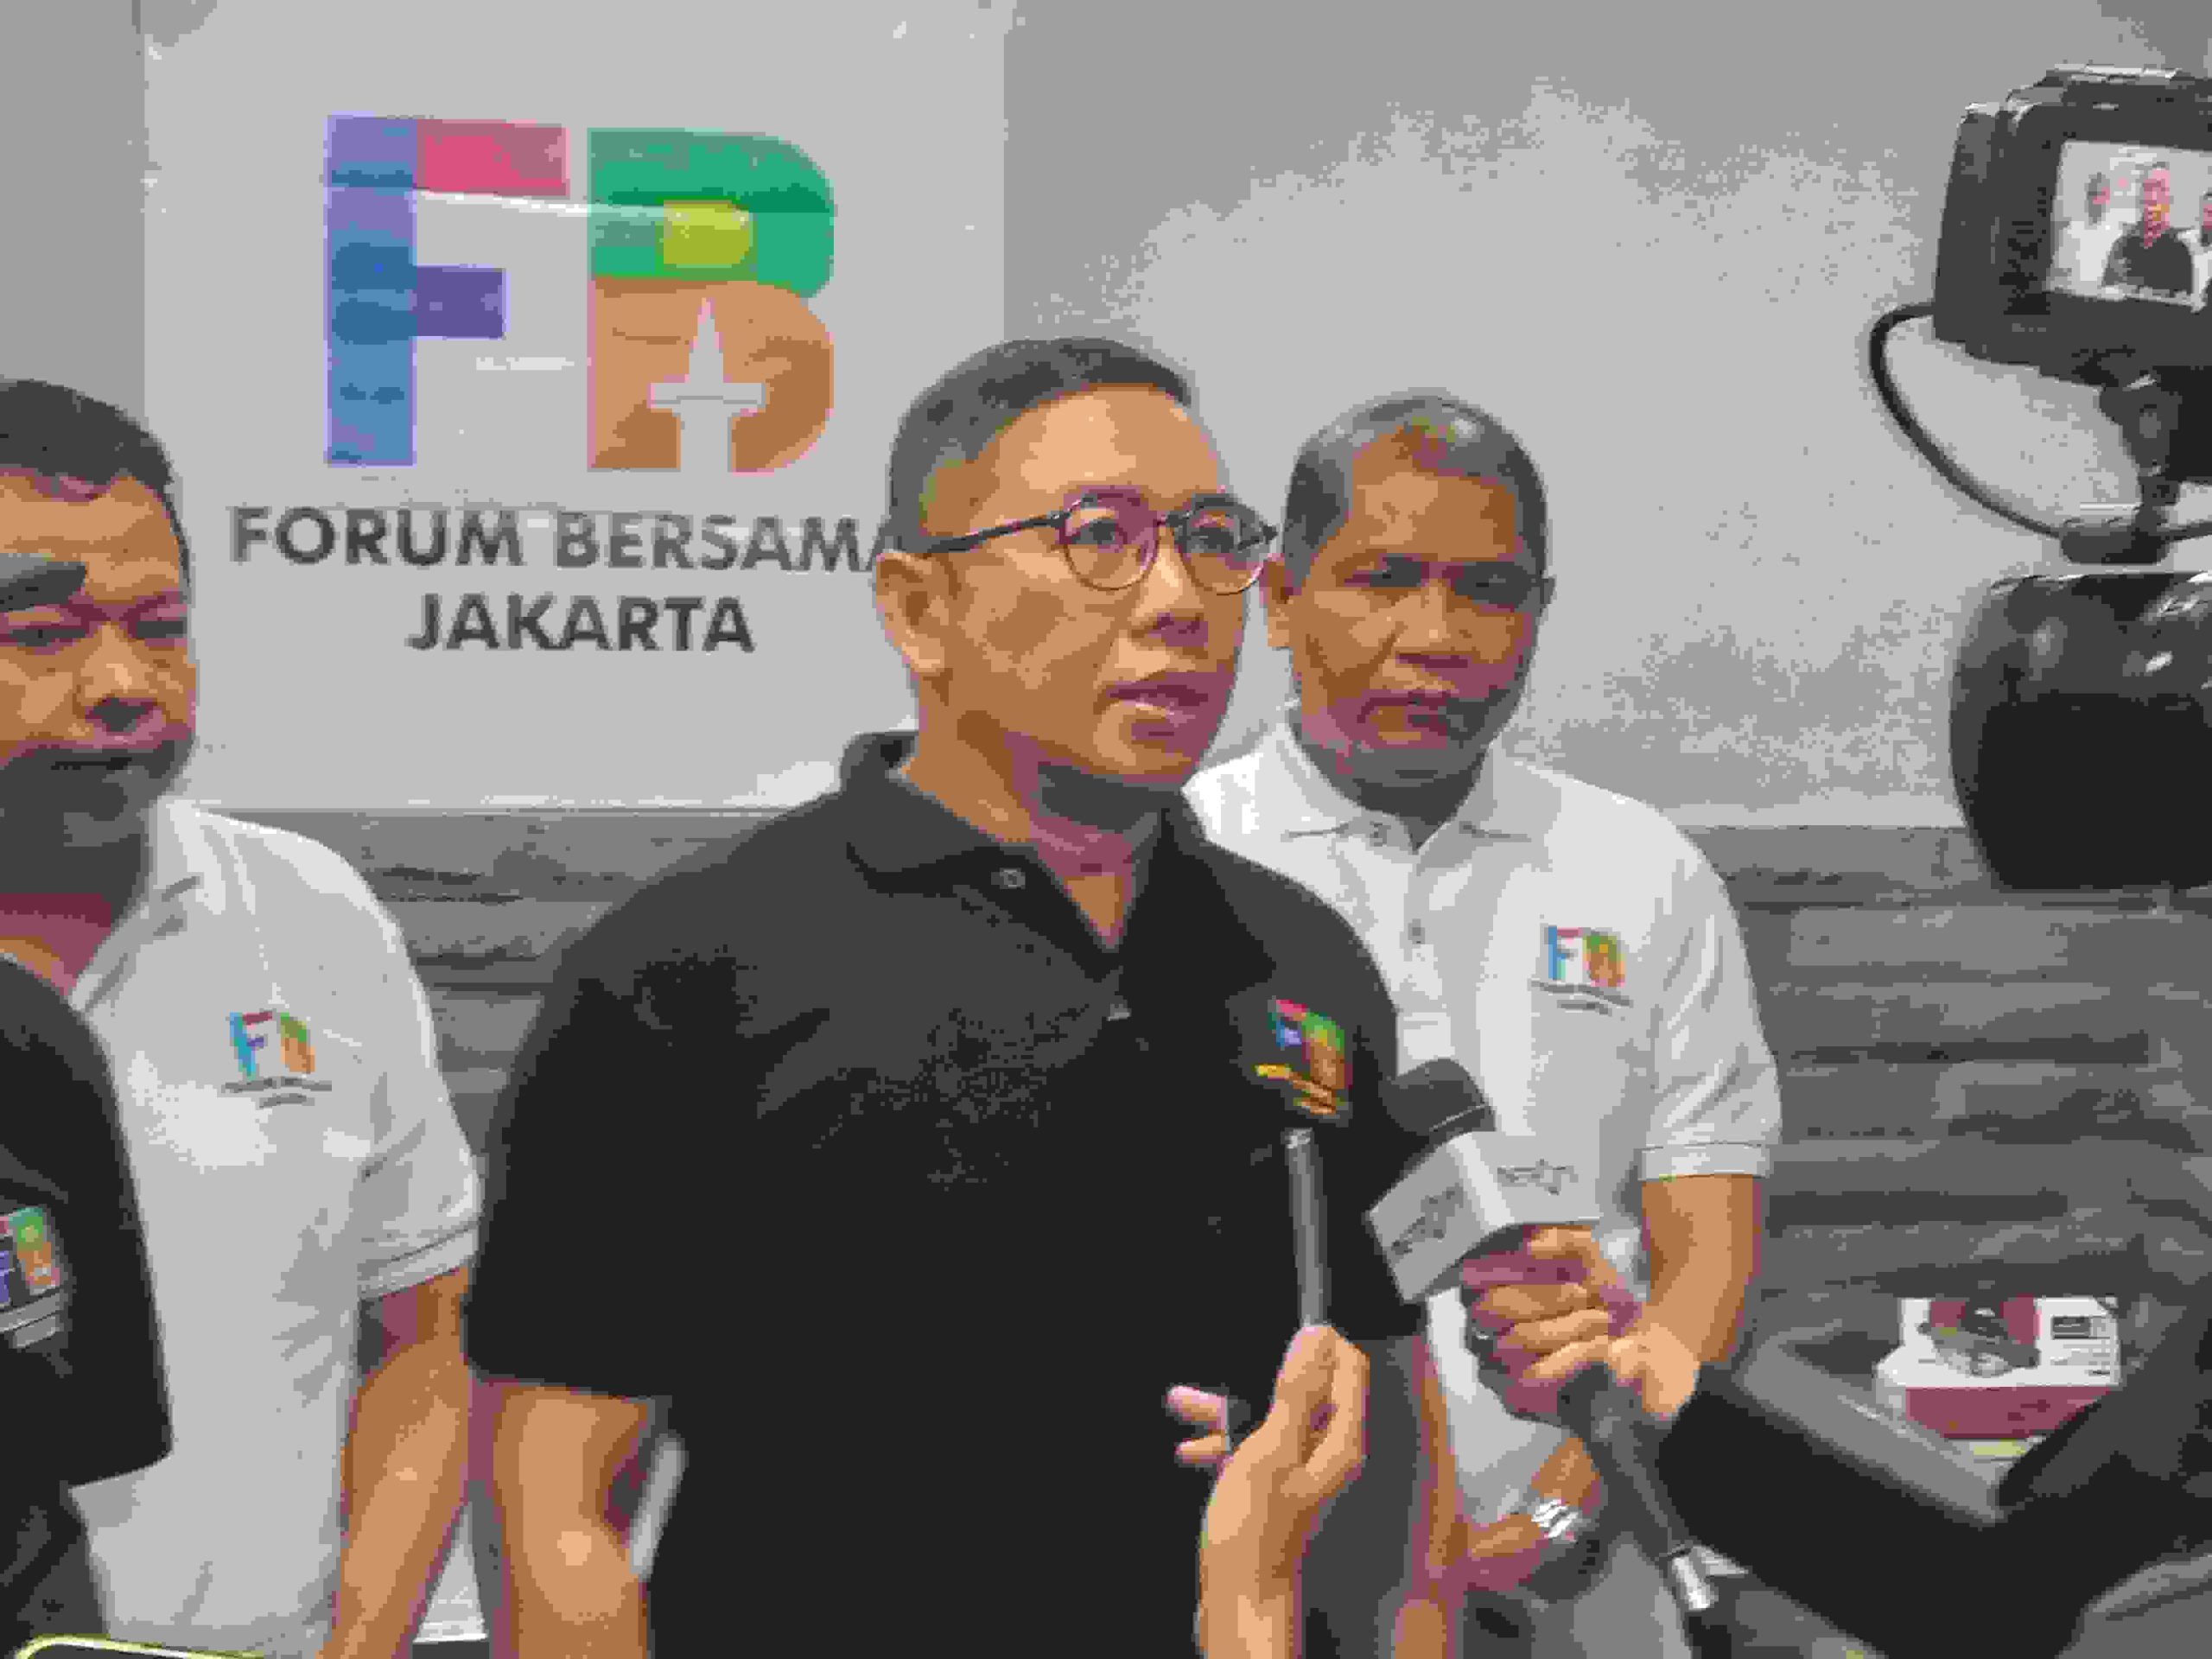 Budi Siswanto (Baju Hitam) Koordinator Forum Bersama Jakarta (FBJ) Pada Saat Konfrensi Pers Dukungan Anies Baswedan Maju Pilkada Jakarta